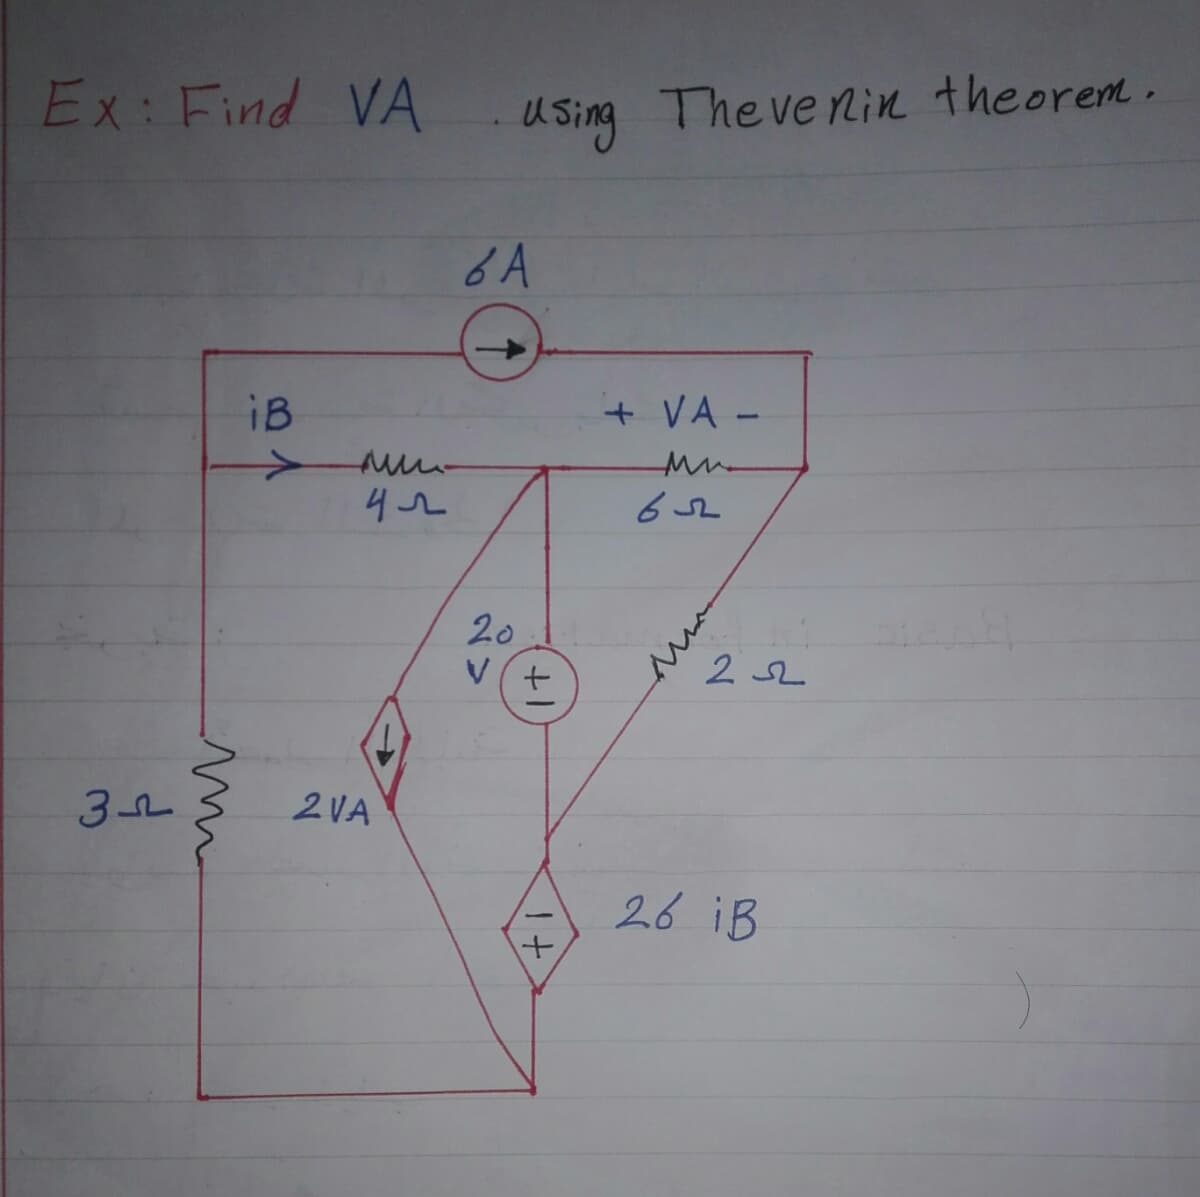 Ex: Find VA
iB
3
лии
42
2 VA
using Thevenin theorem.
6 A
+ VA -
Mu
2011
v (+
It
+
22
26 iB